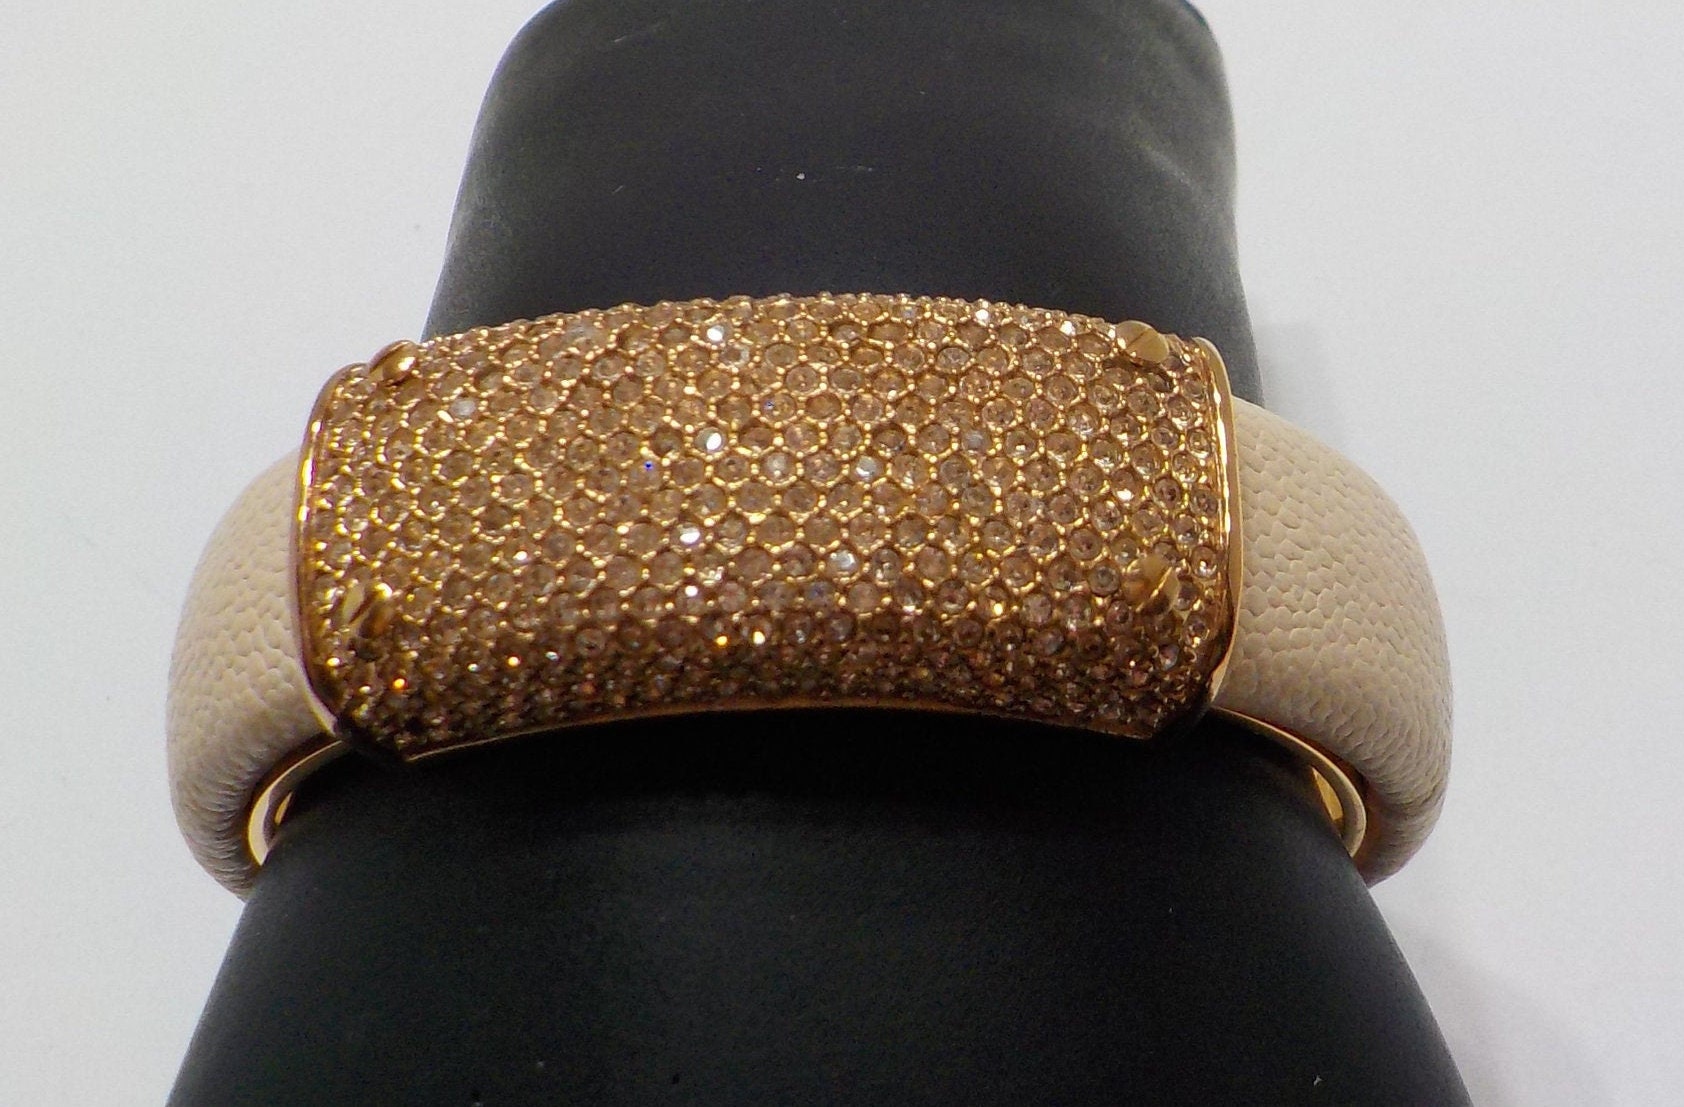 Henri Bendel Rose Gold Tone Chain and Cuff Bracelet (Double Bracelet)